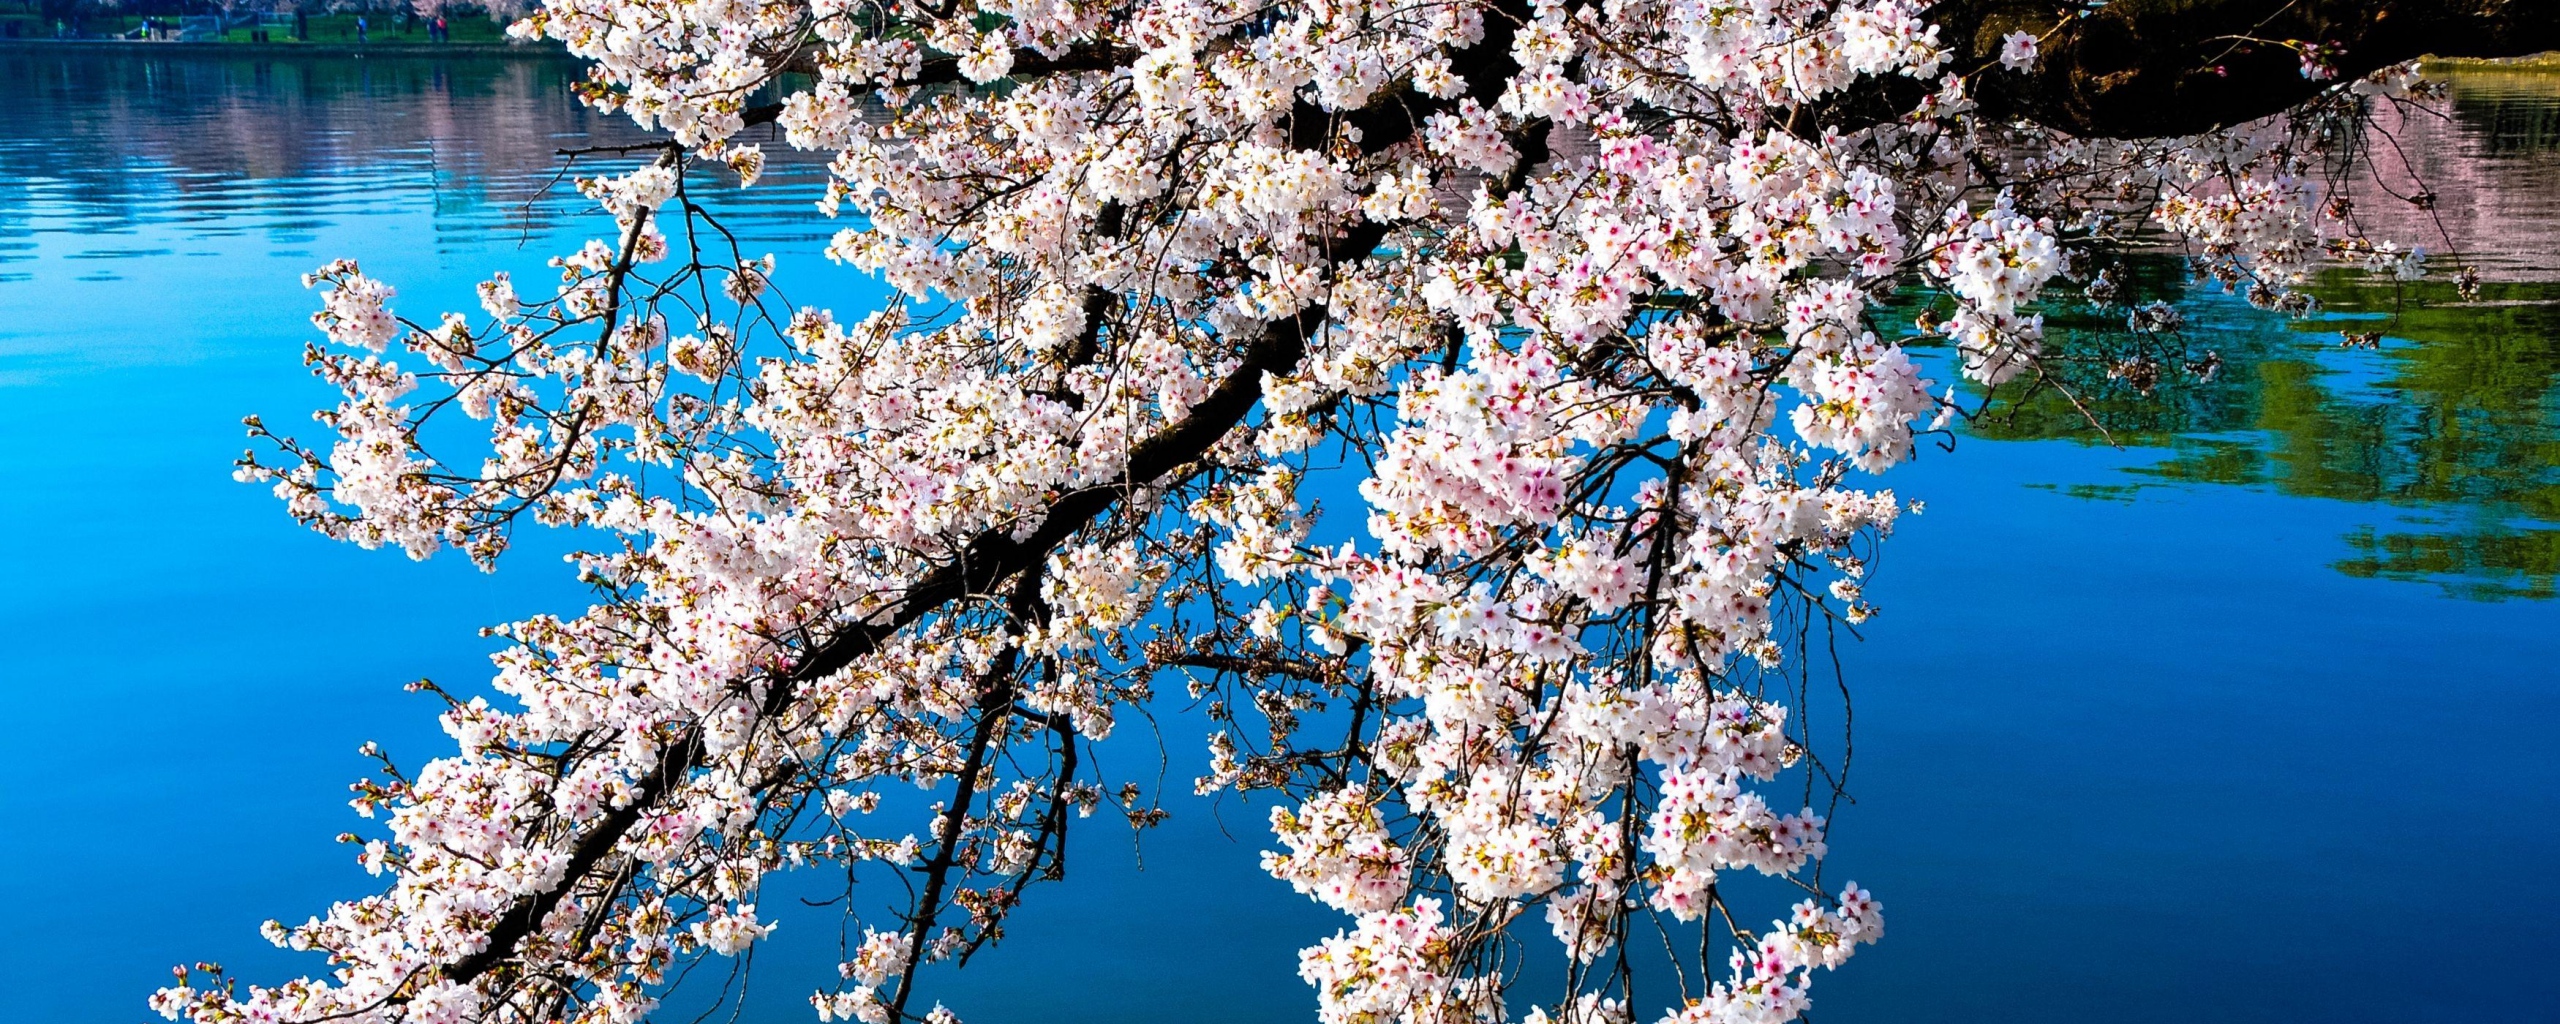 2560x1024 Wallpaper sakura blossoms branches water reflection